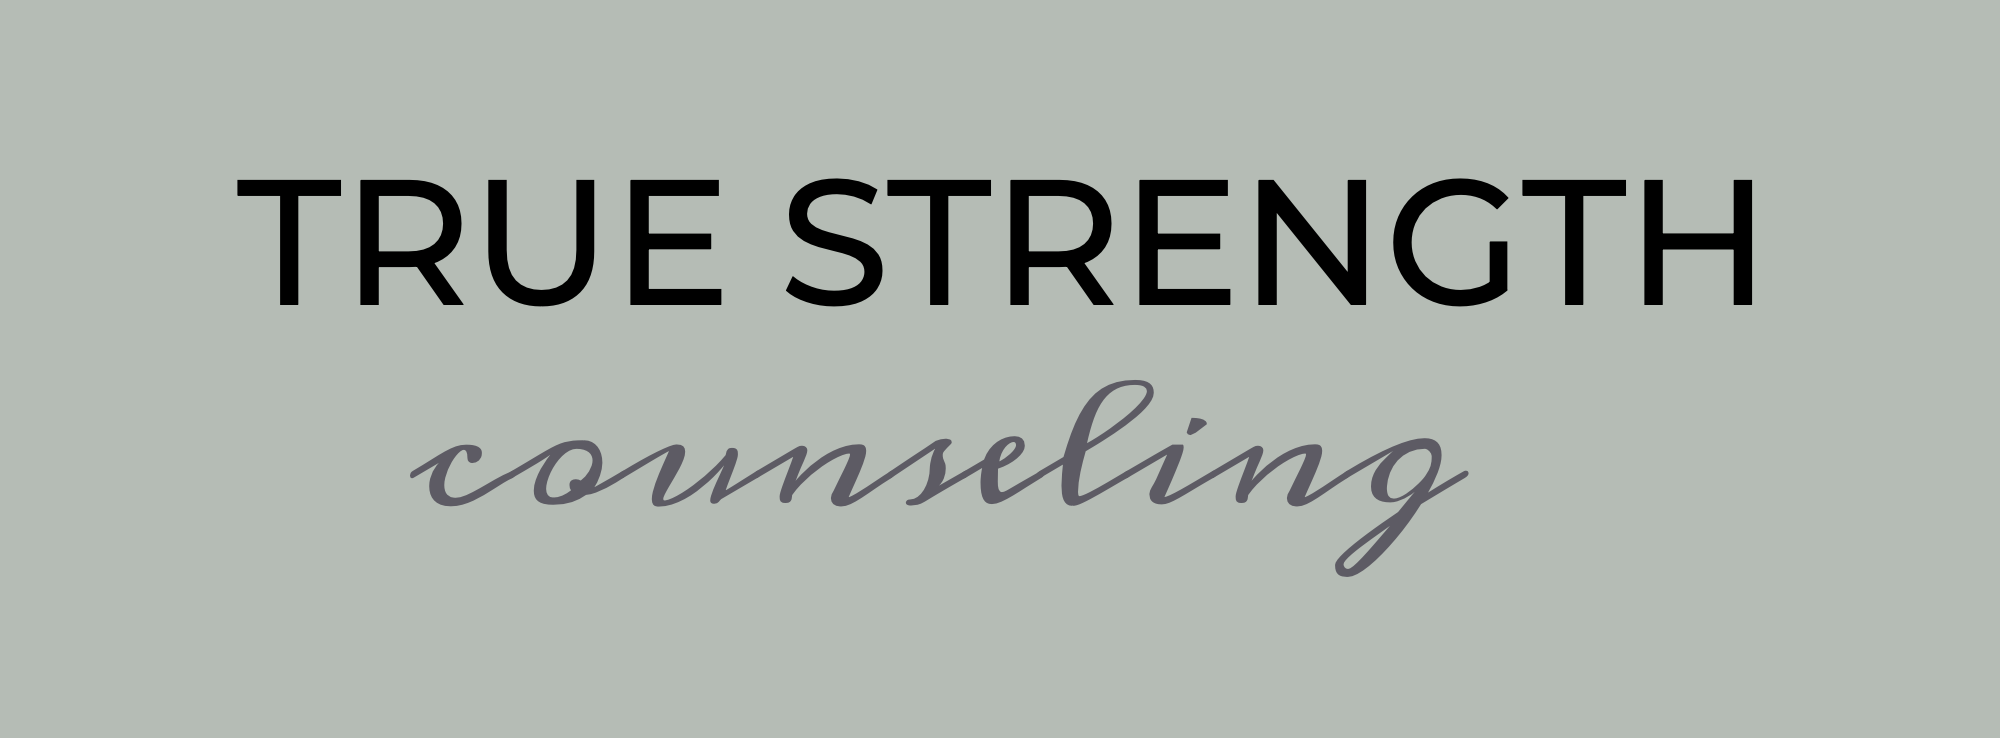 True Strength Counseling  Logo